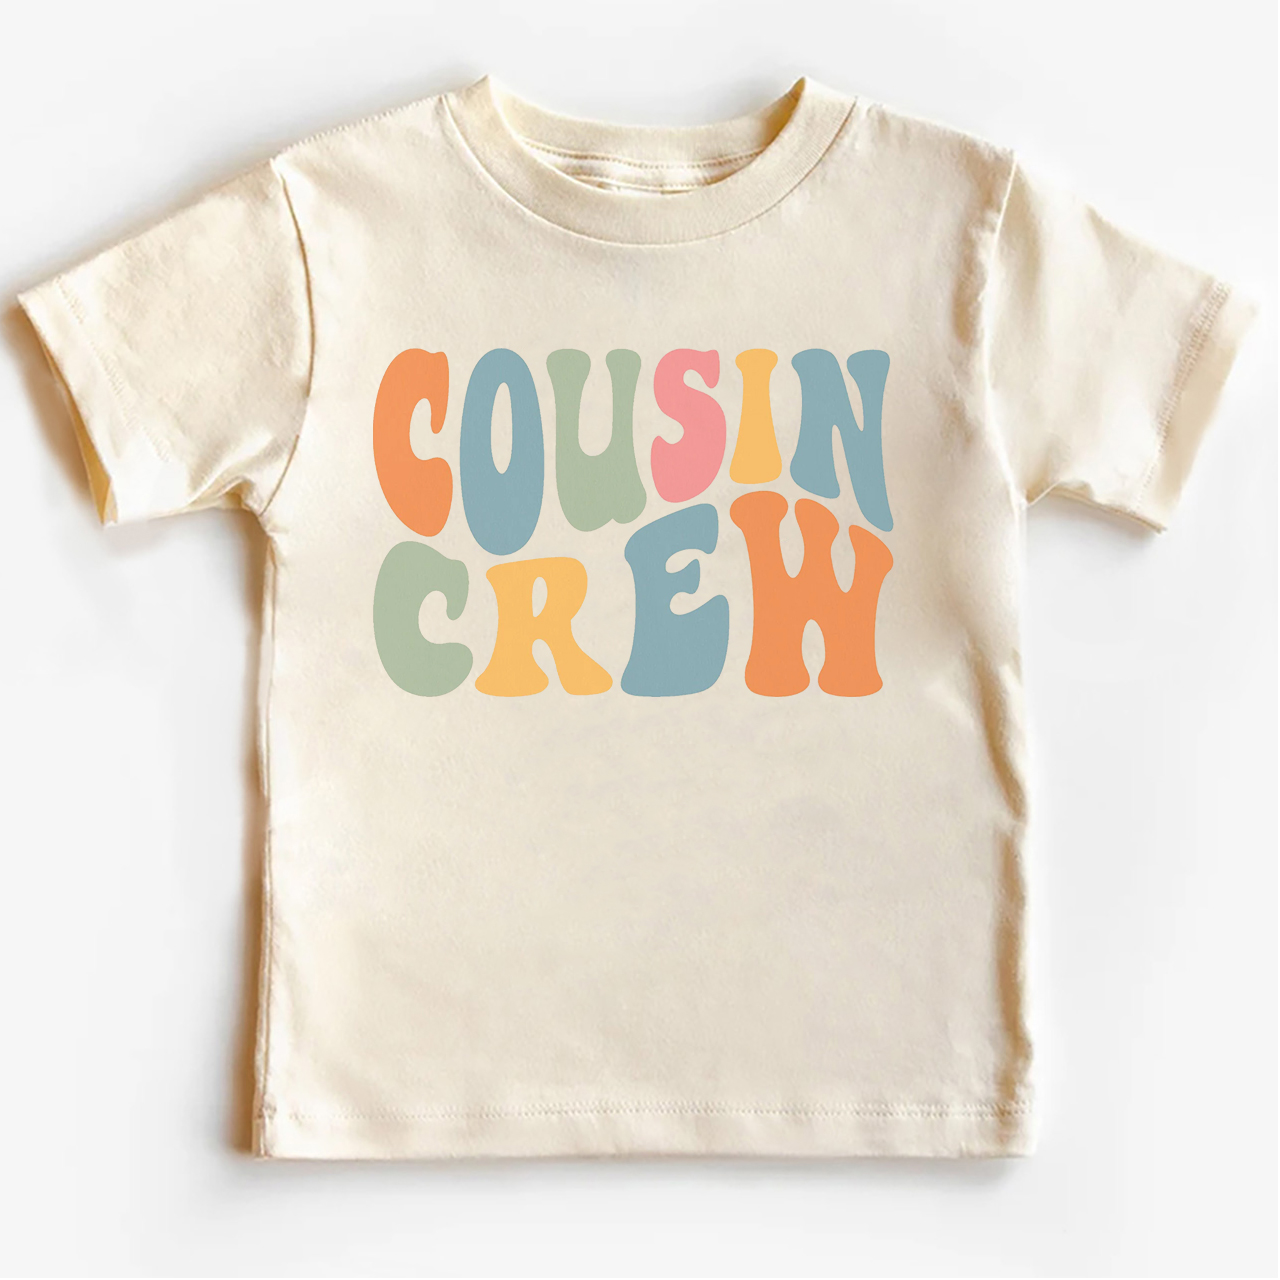 Retro Cousin Crew Shirts For Kids